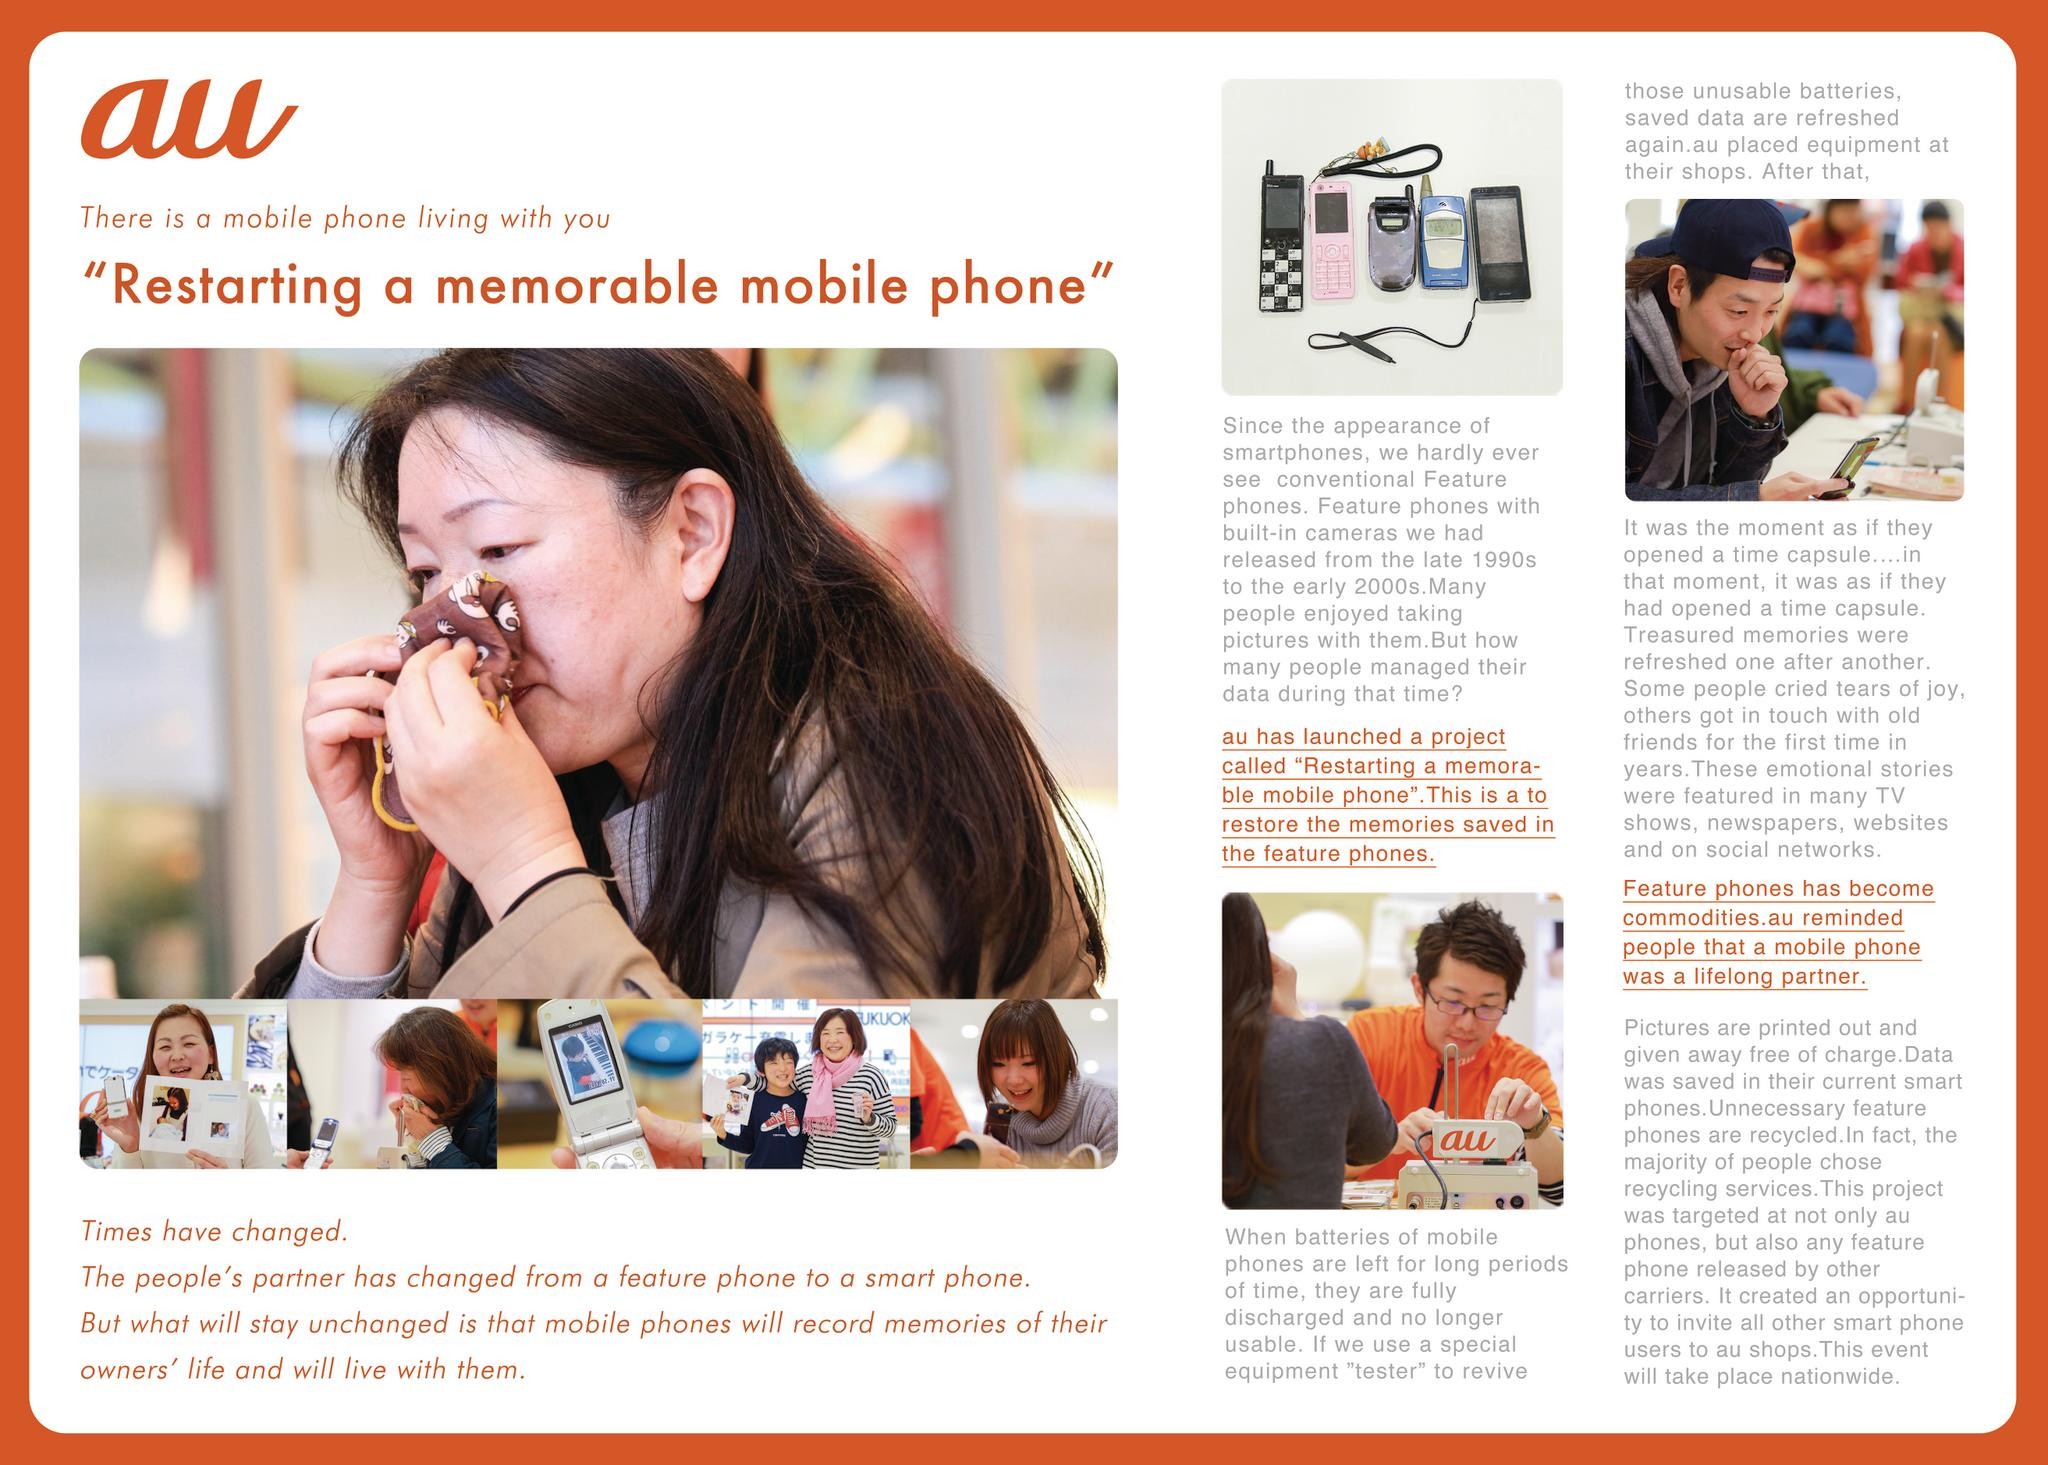 Restarting a memorable mobile phone